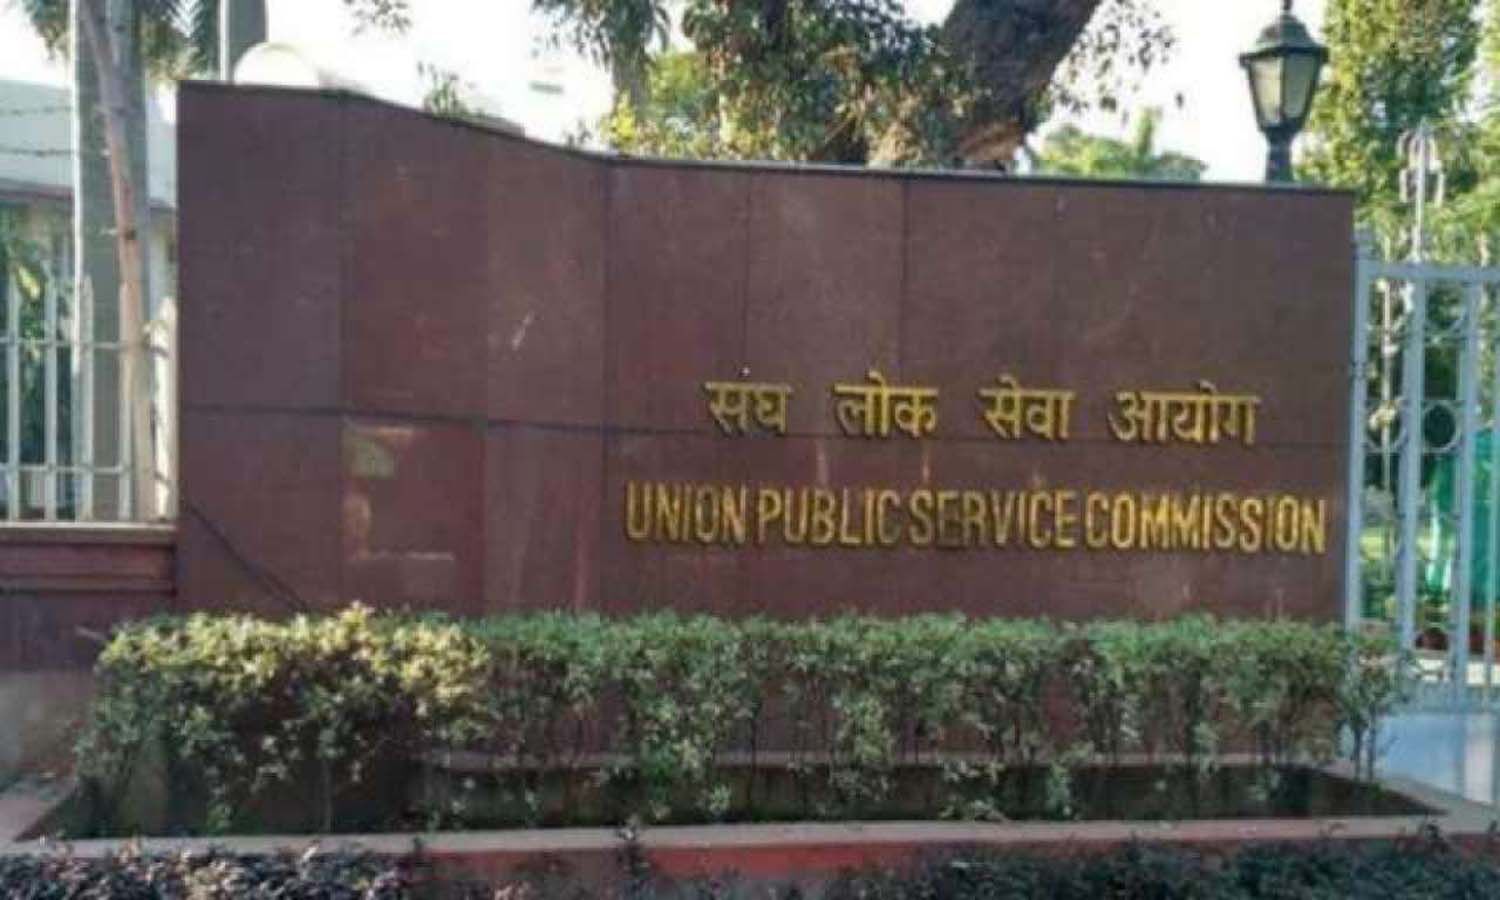 UPSC Recruitment 2023: यूपीएससी ने निकाली बम्पर भर्तियां, जानिए पूरी आवेदन प्रक्रियां